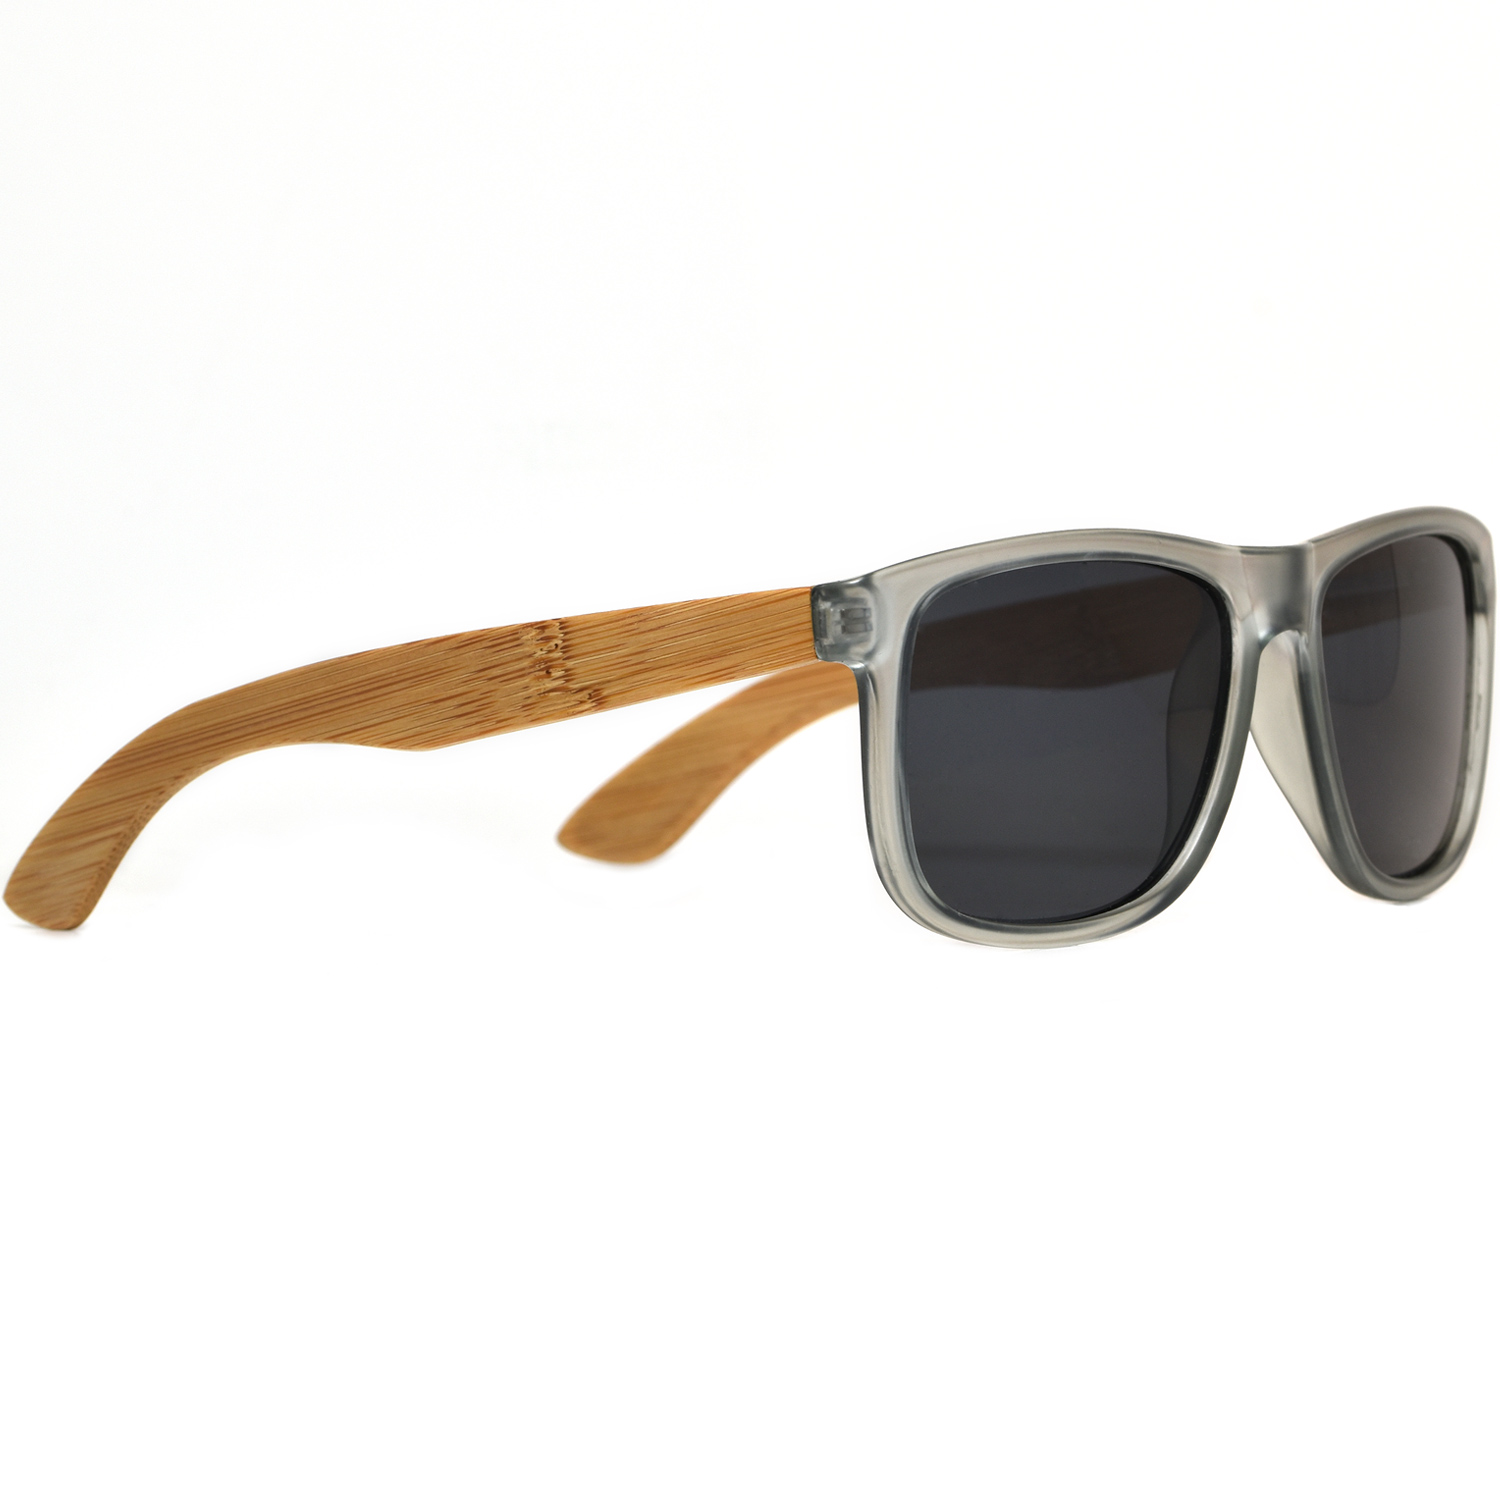 Square bamboo wood sunglasses black polarized lenses right